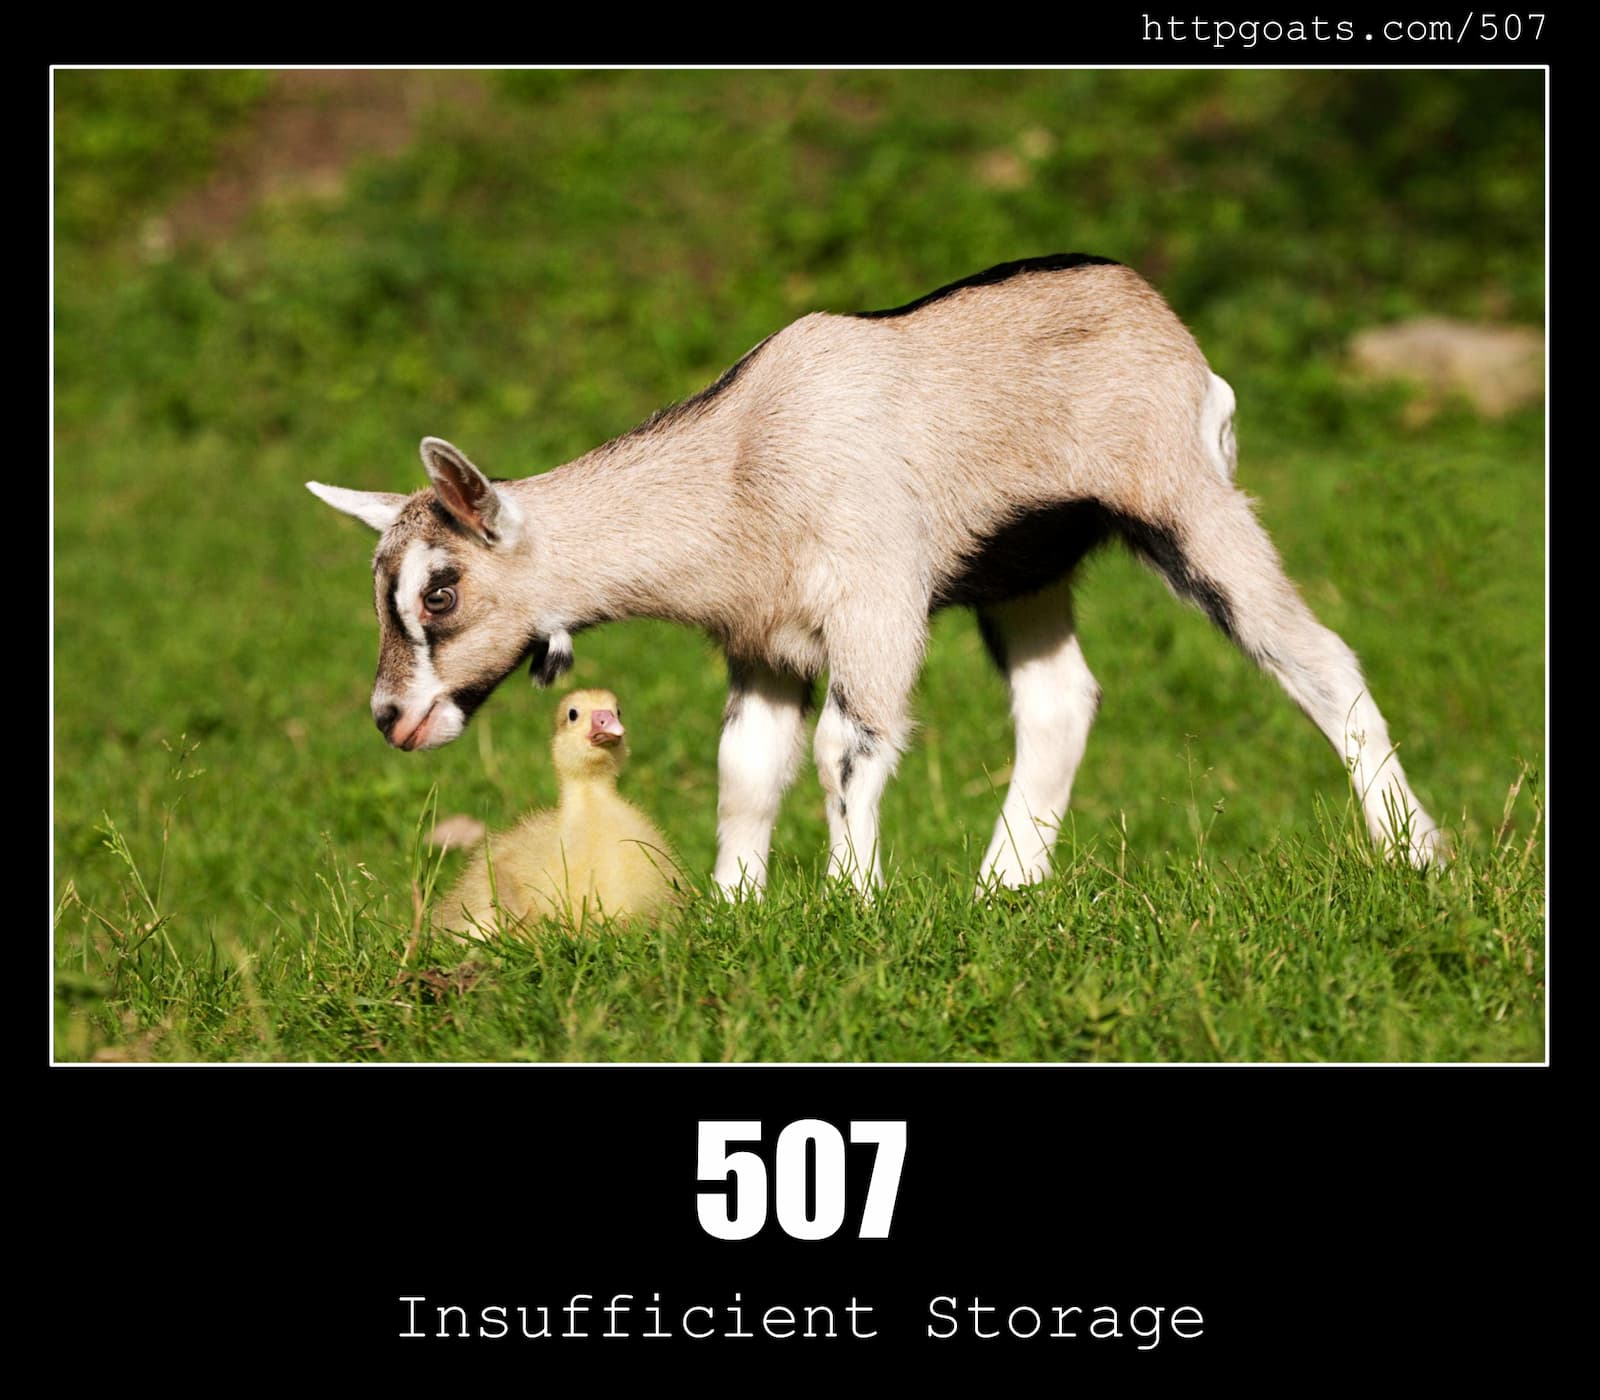 HTTP Status Code 507 Insufficient Storage & Goats